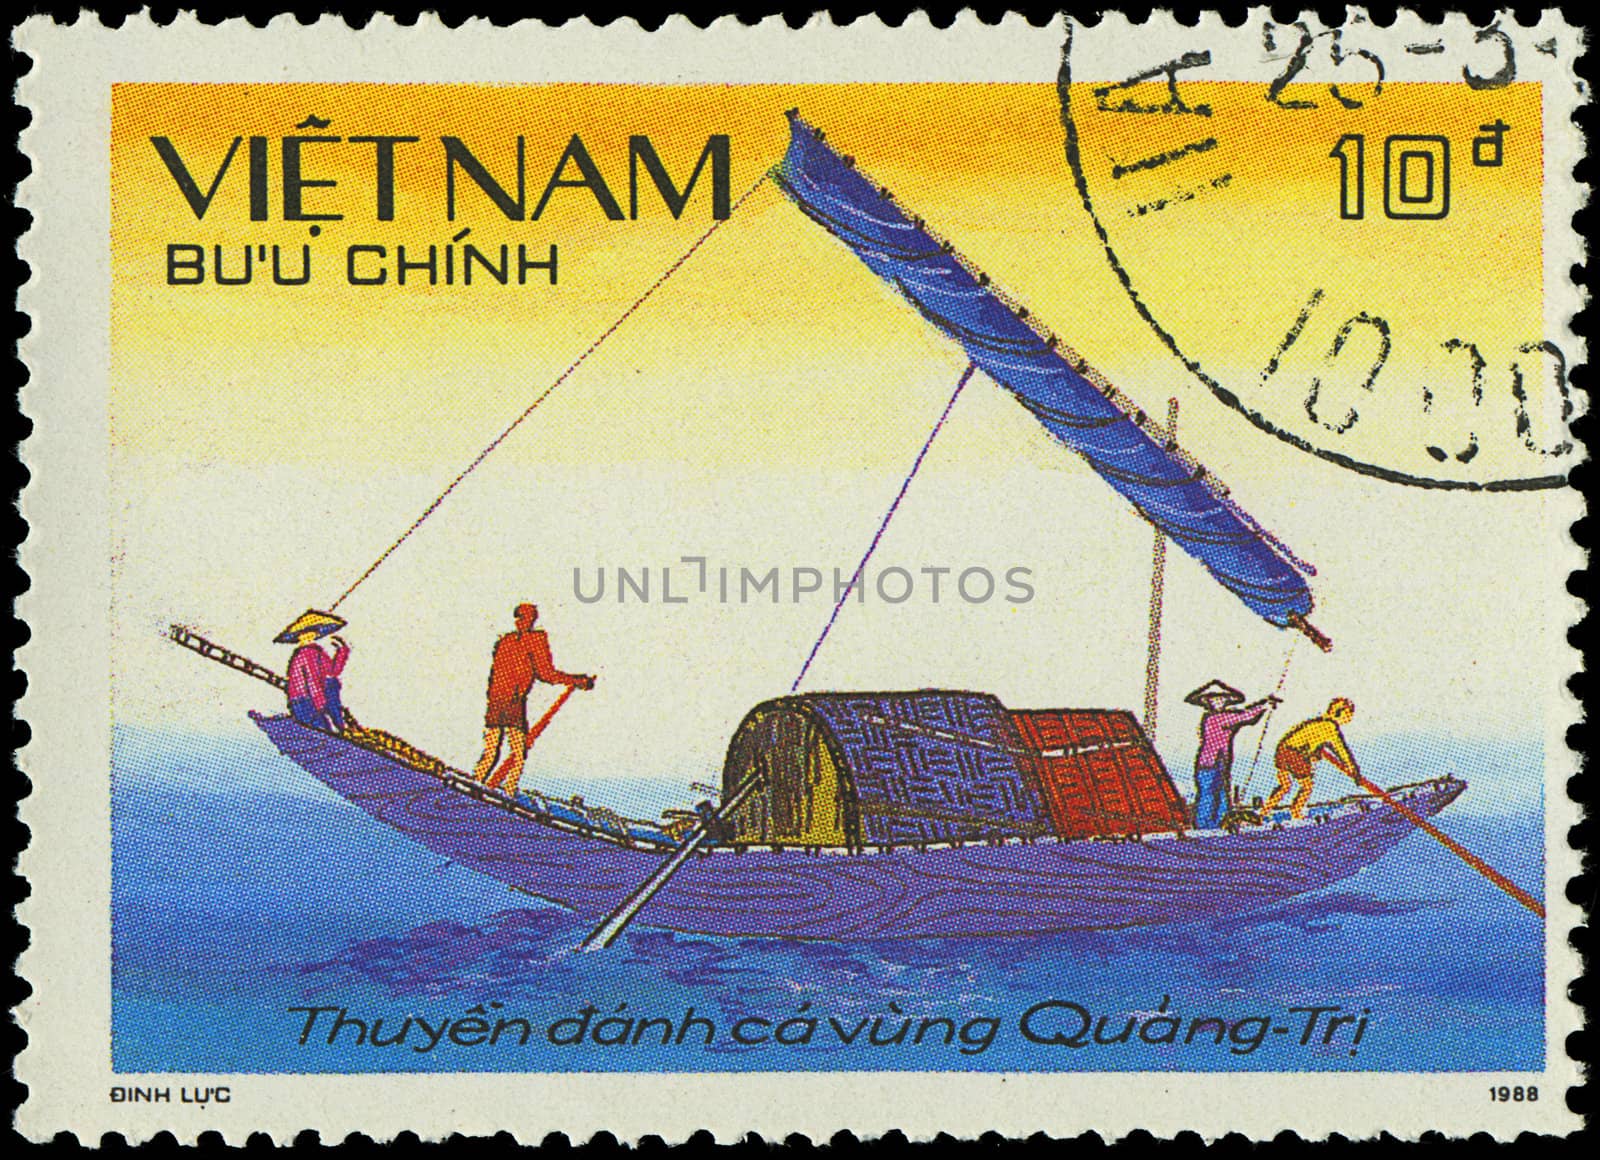 VIETNAM - CIRCA 1988: a stamp printed by VIETNAM shows image of a sailing ship, series, circa 1988